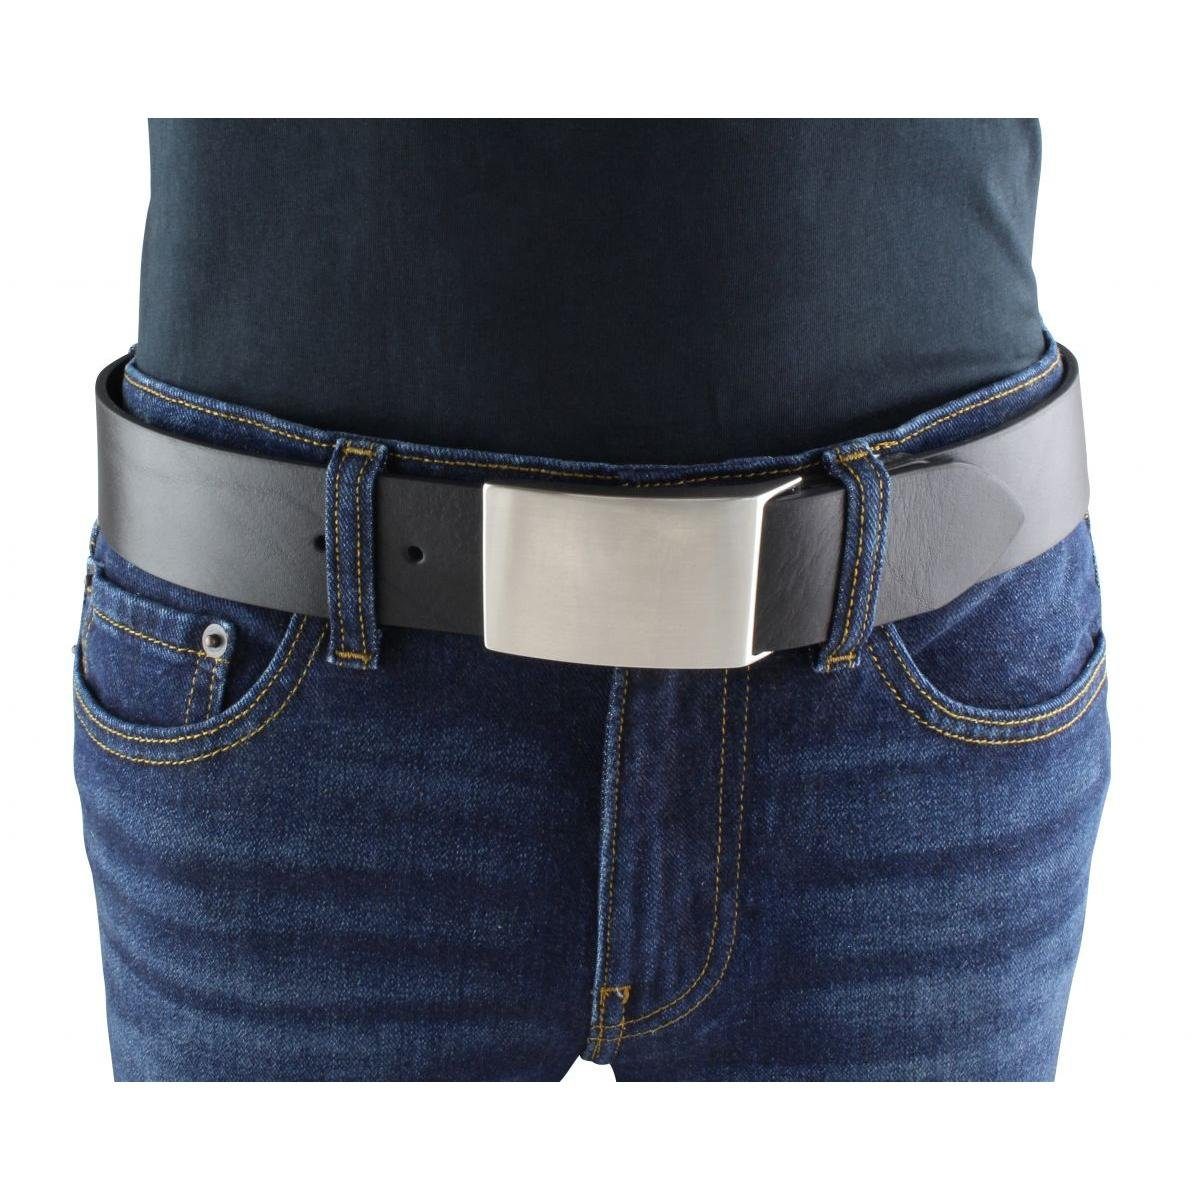 aus 45mm Jeans - Vollrindleder für cm Braun, 4,5 Gürtel Jeans-Gürtel BELTINGER Ledergürtel Silber - Herren